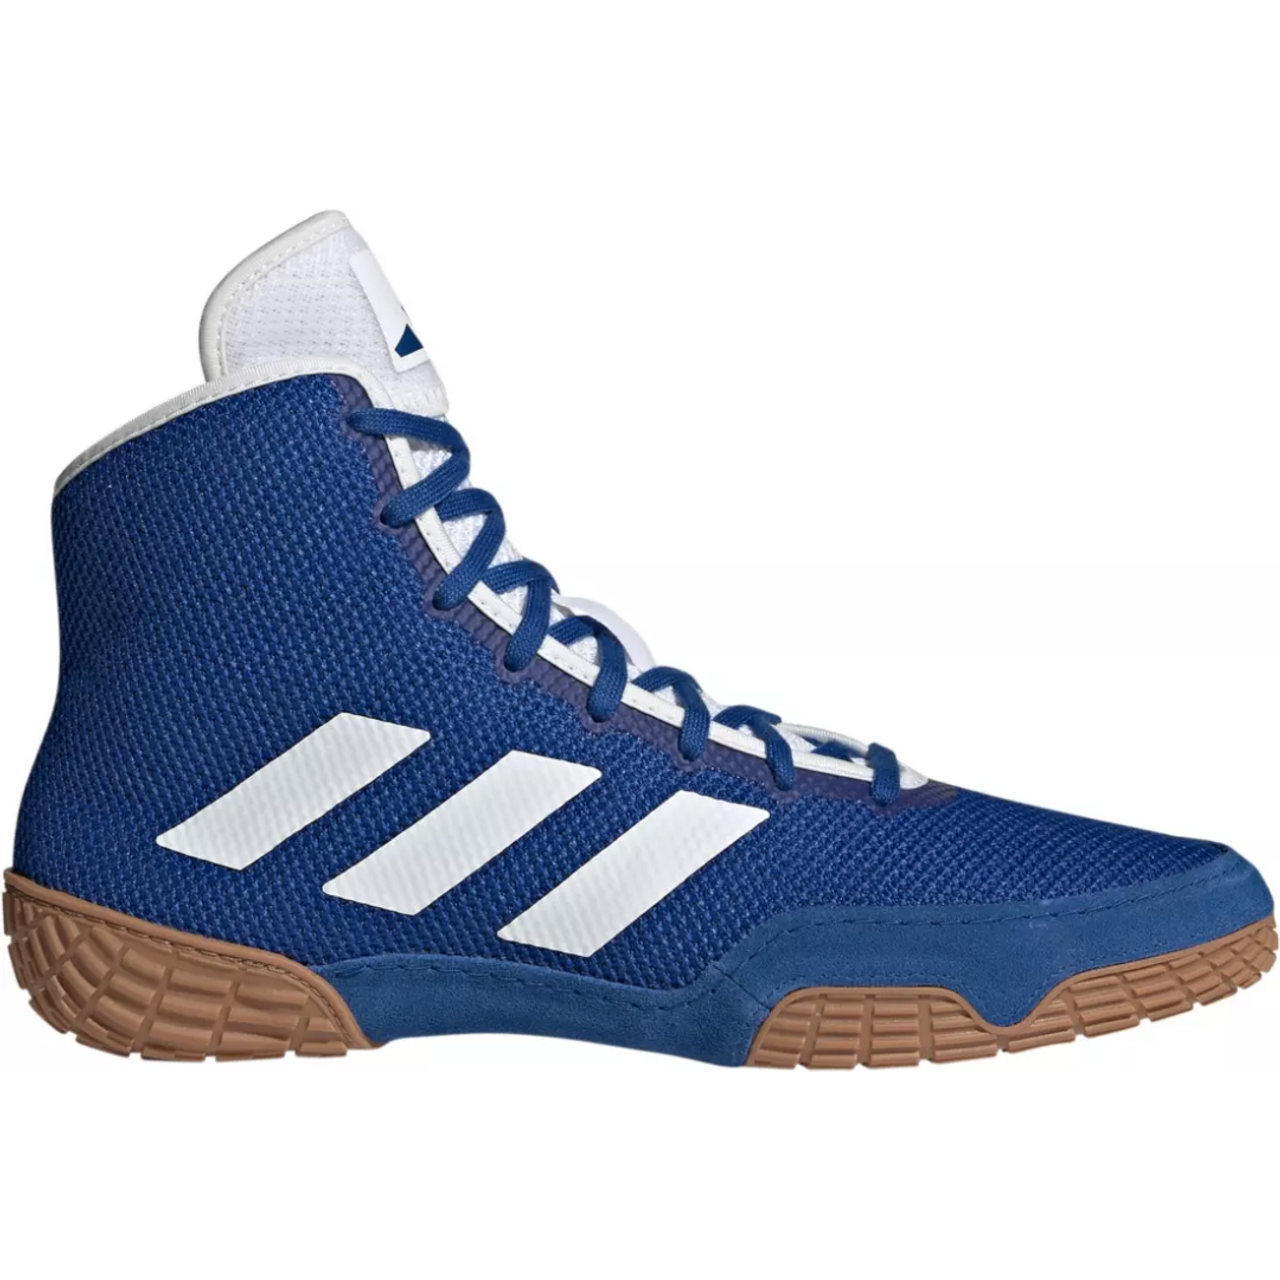 Adidas Men's Tech Fall 2.0 Wrestling Shoe